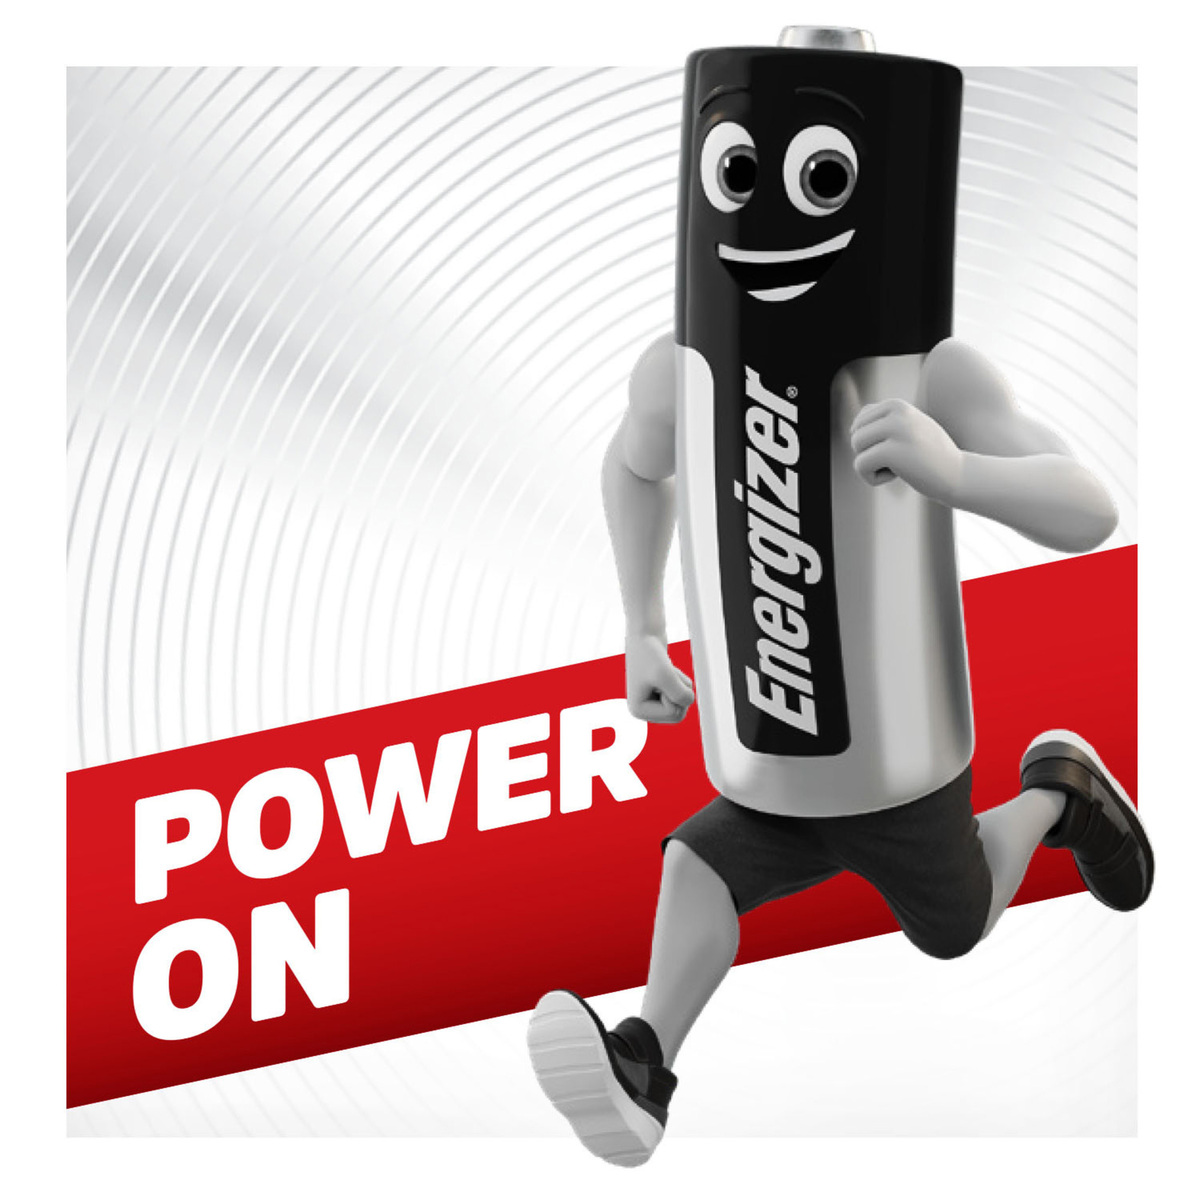 Energizer CR2025 Lithium Coin Batteries, 4 Pcs, E-CR2025 BP4